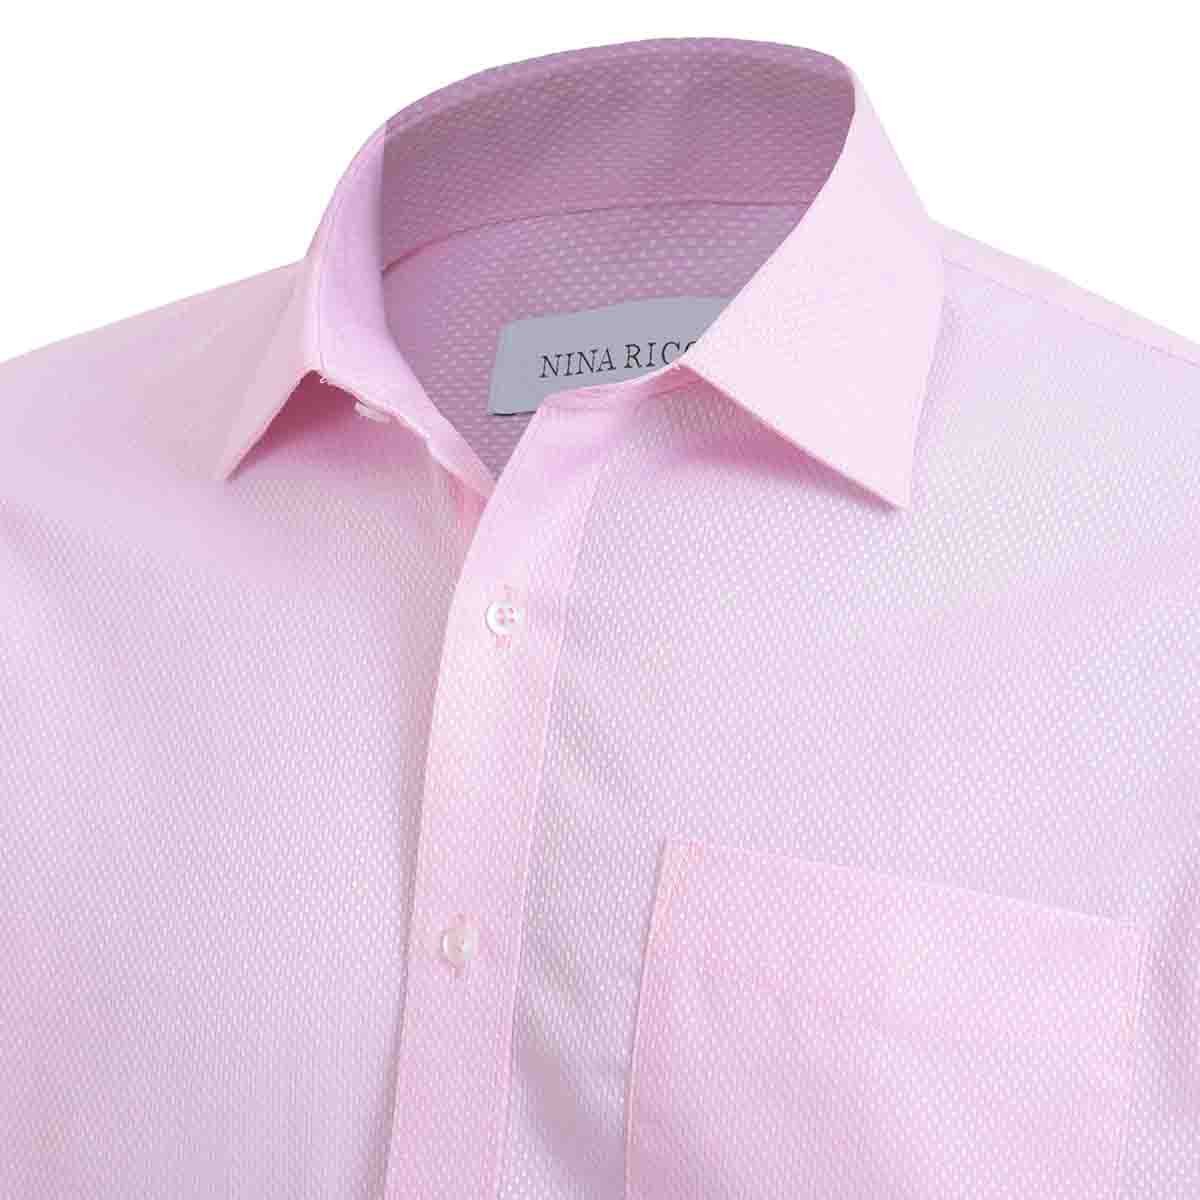 Camisa de Vestir Color Rosa Claro Nina Ricci para Caballero